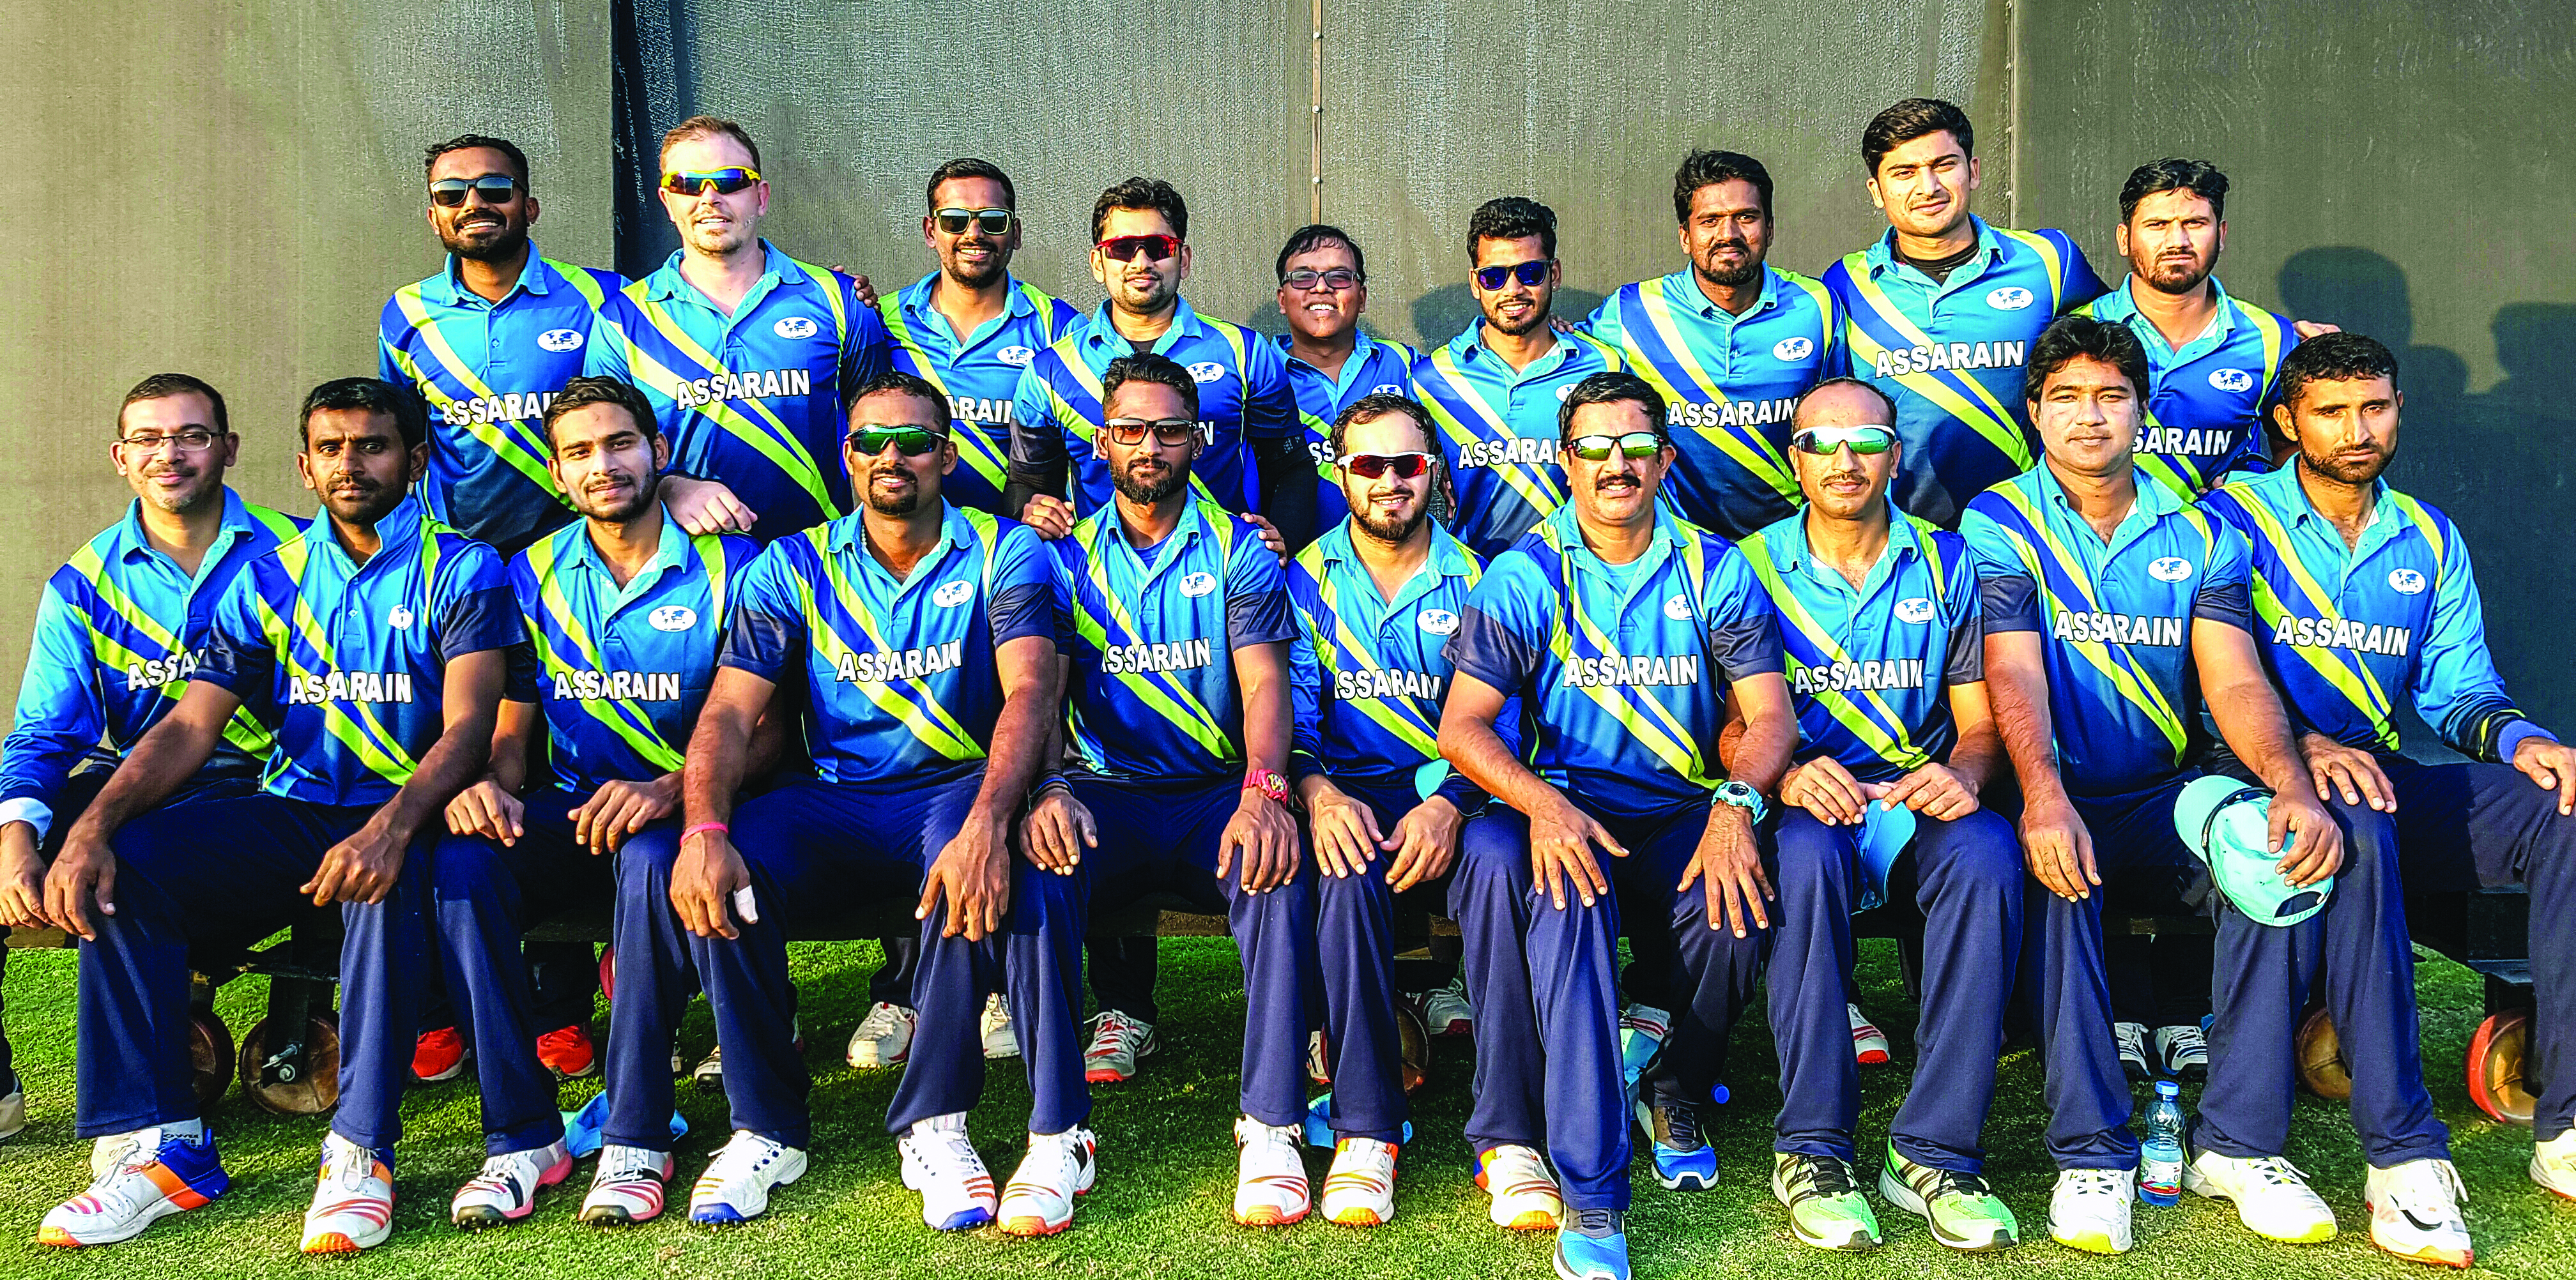 Oman Cricket: Assarain retain Premier Division T20 crown